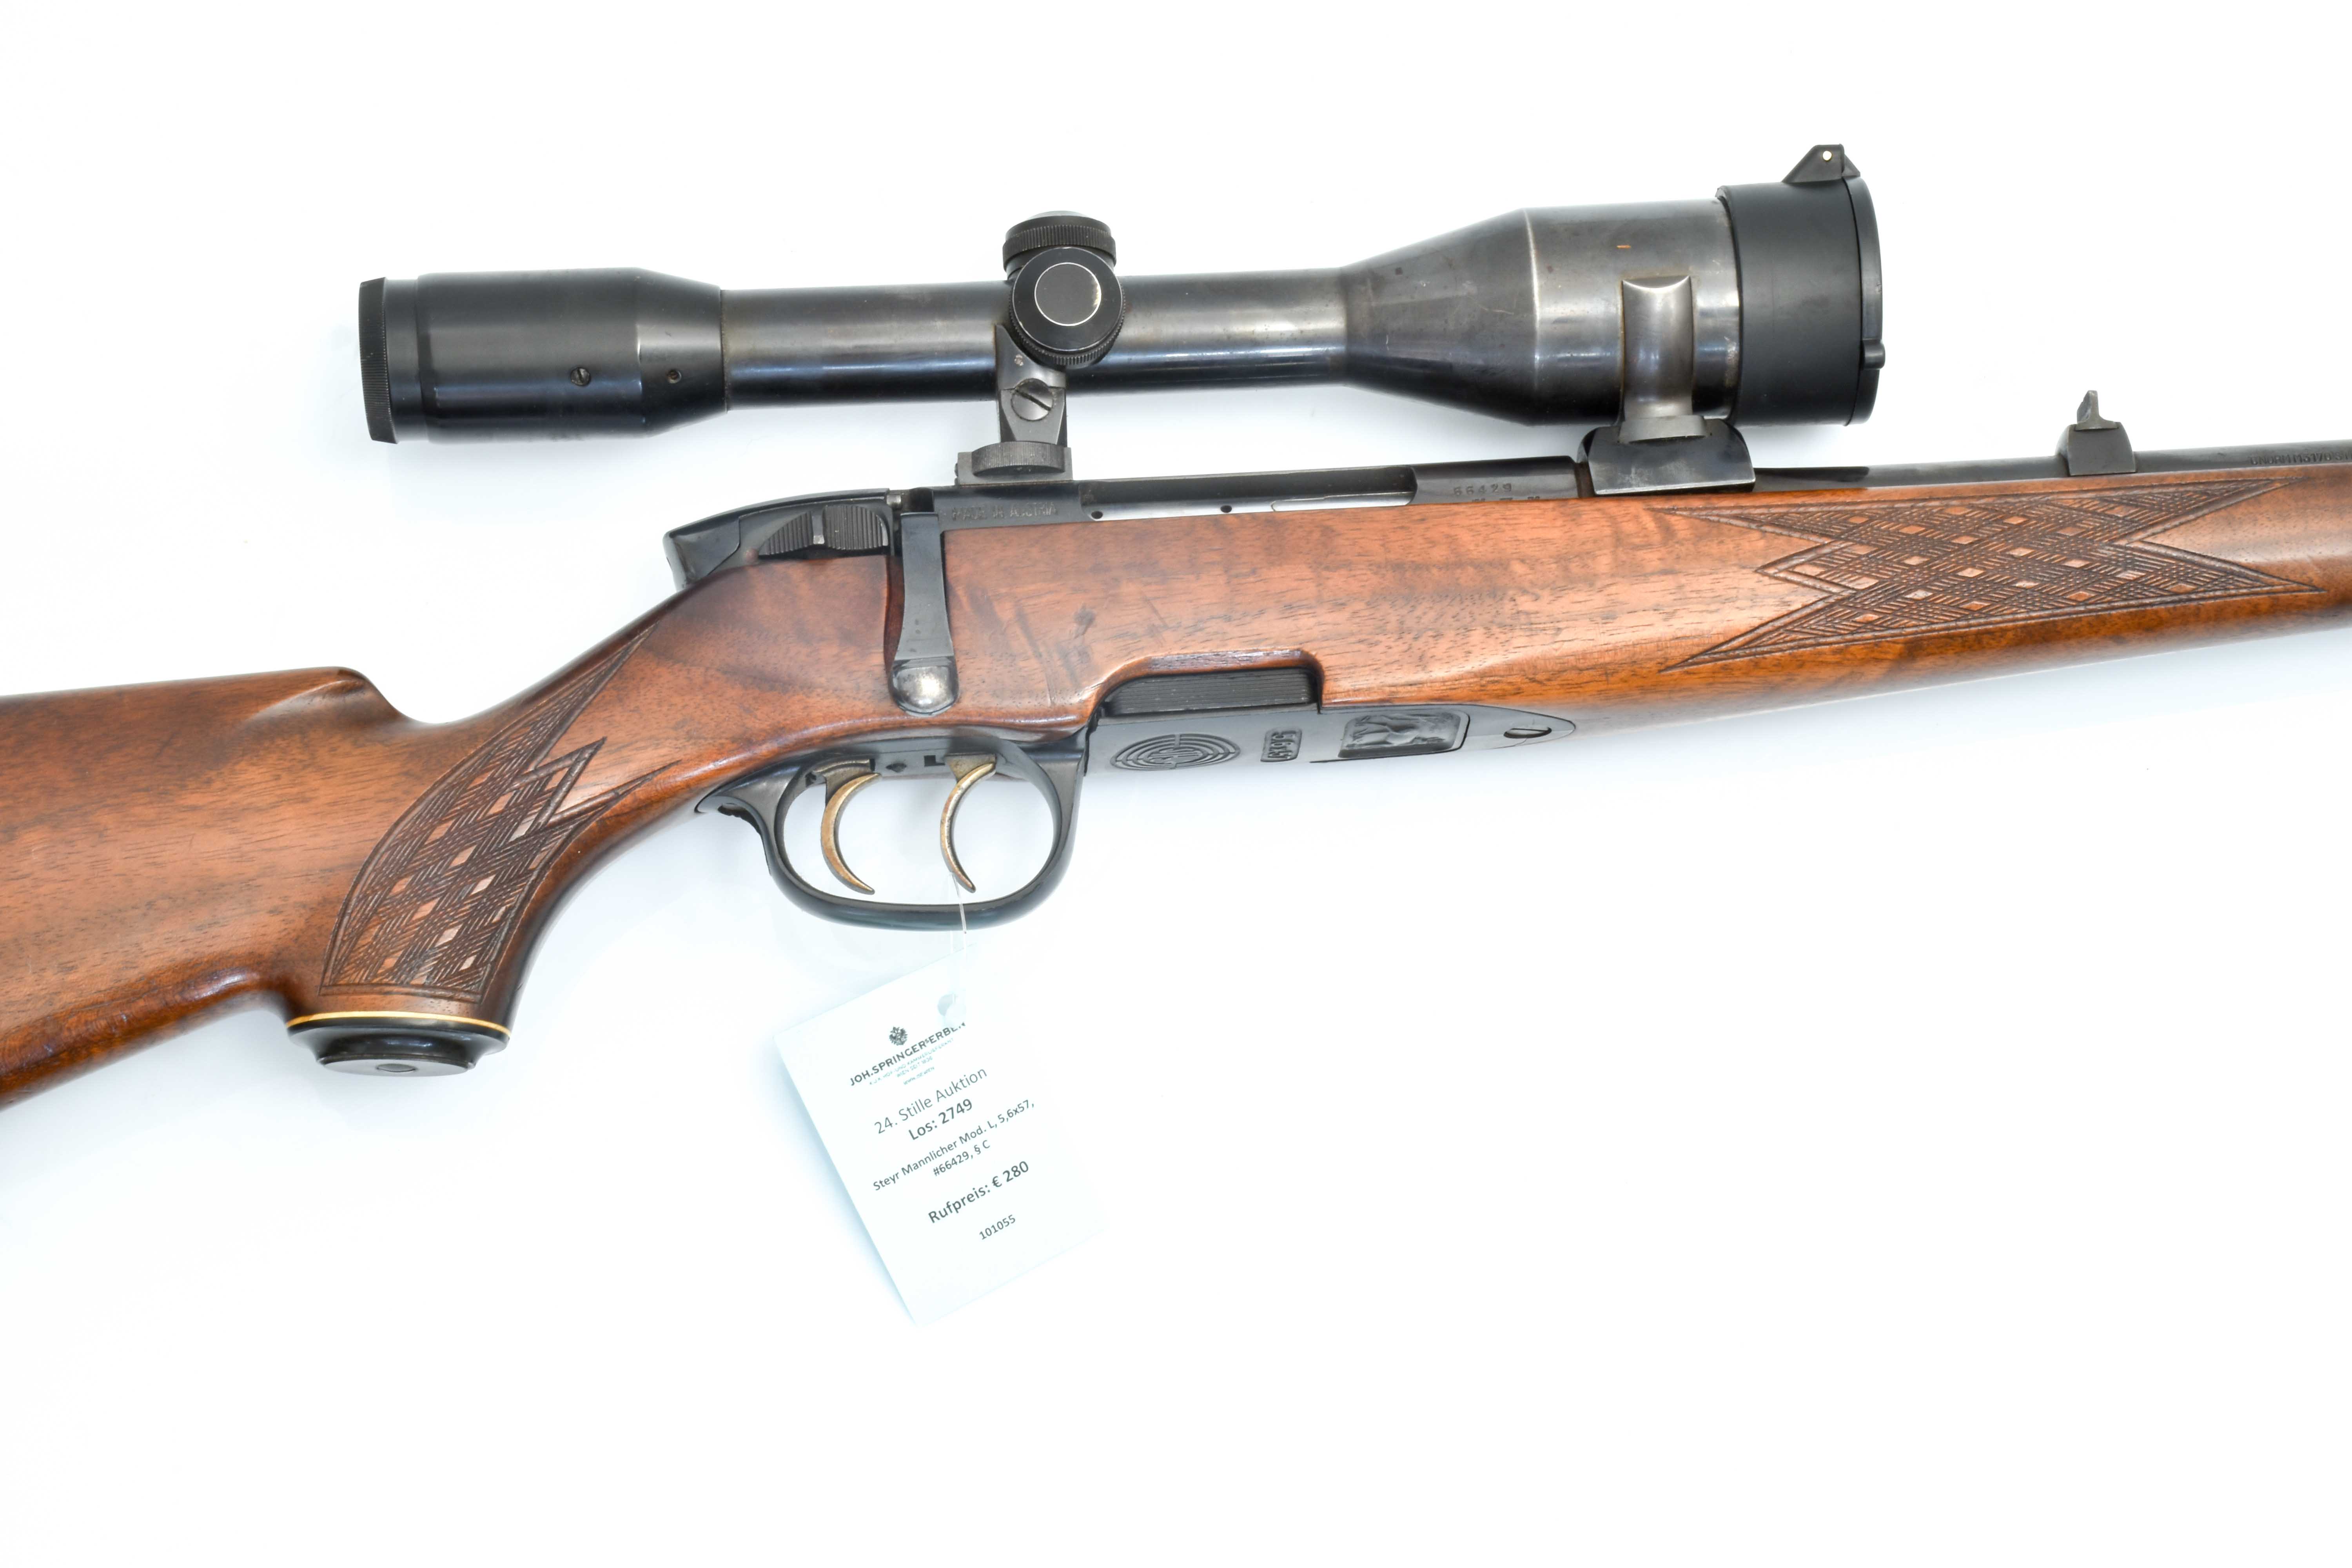 Пистолет манлихер образца 1894 года (mannlicher m1894) и его разновидности